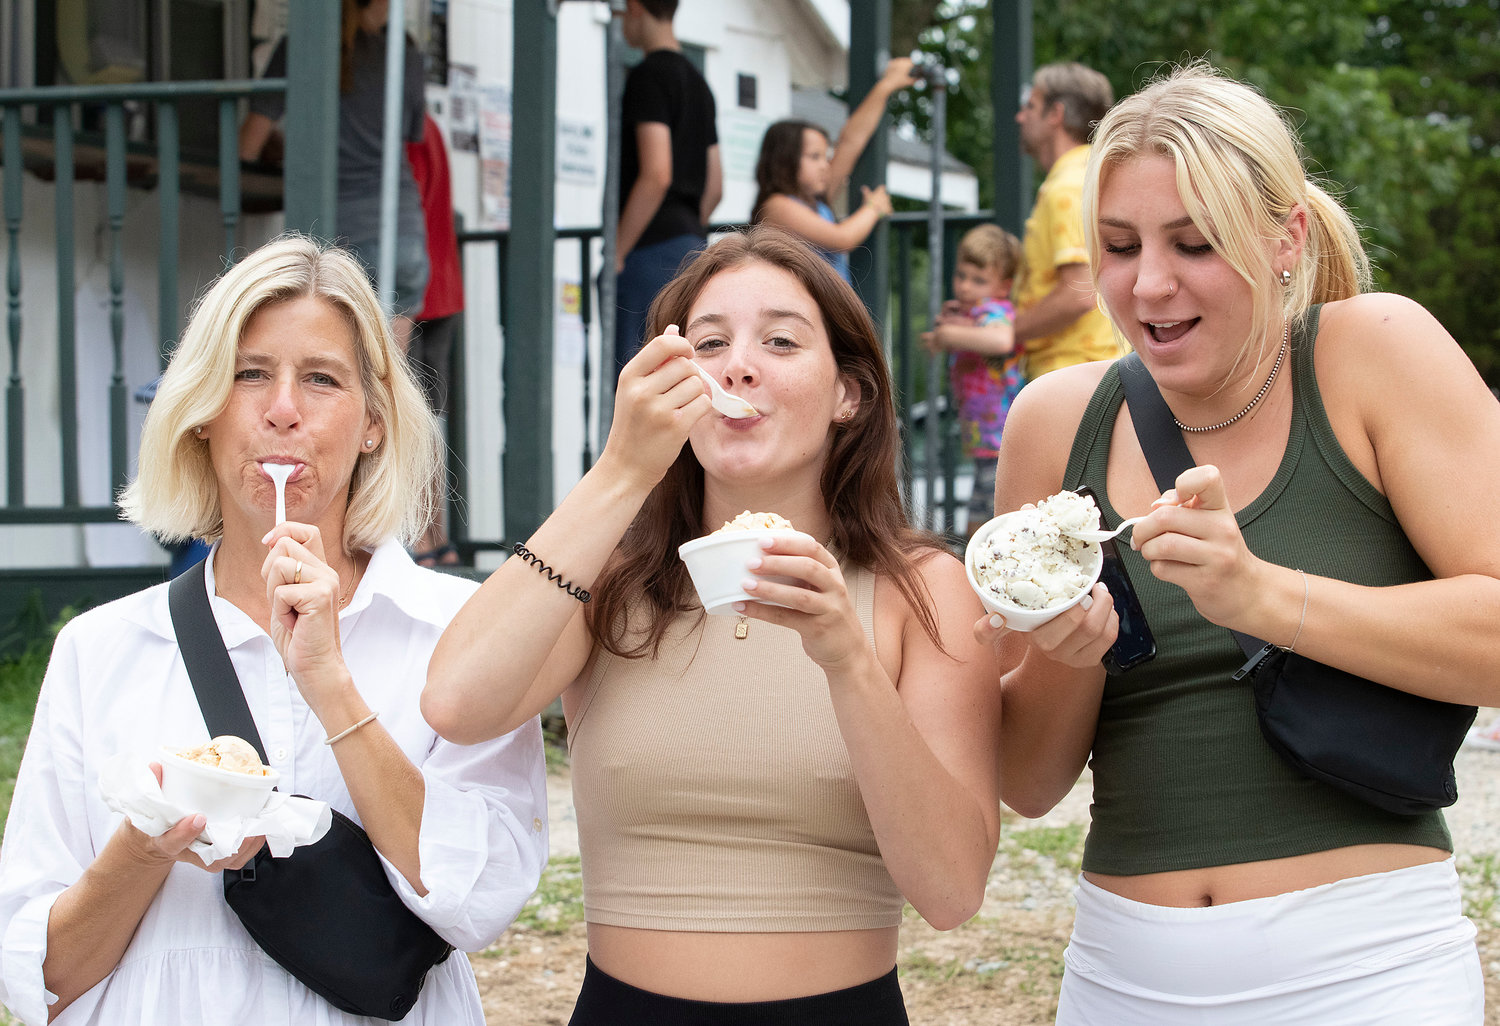 Mary Penn, Grace Holowka and Emily Penn (left to right) enjoy their ice cream at Wood’s Farm Ice Cream in Westport.